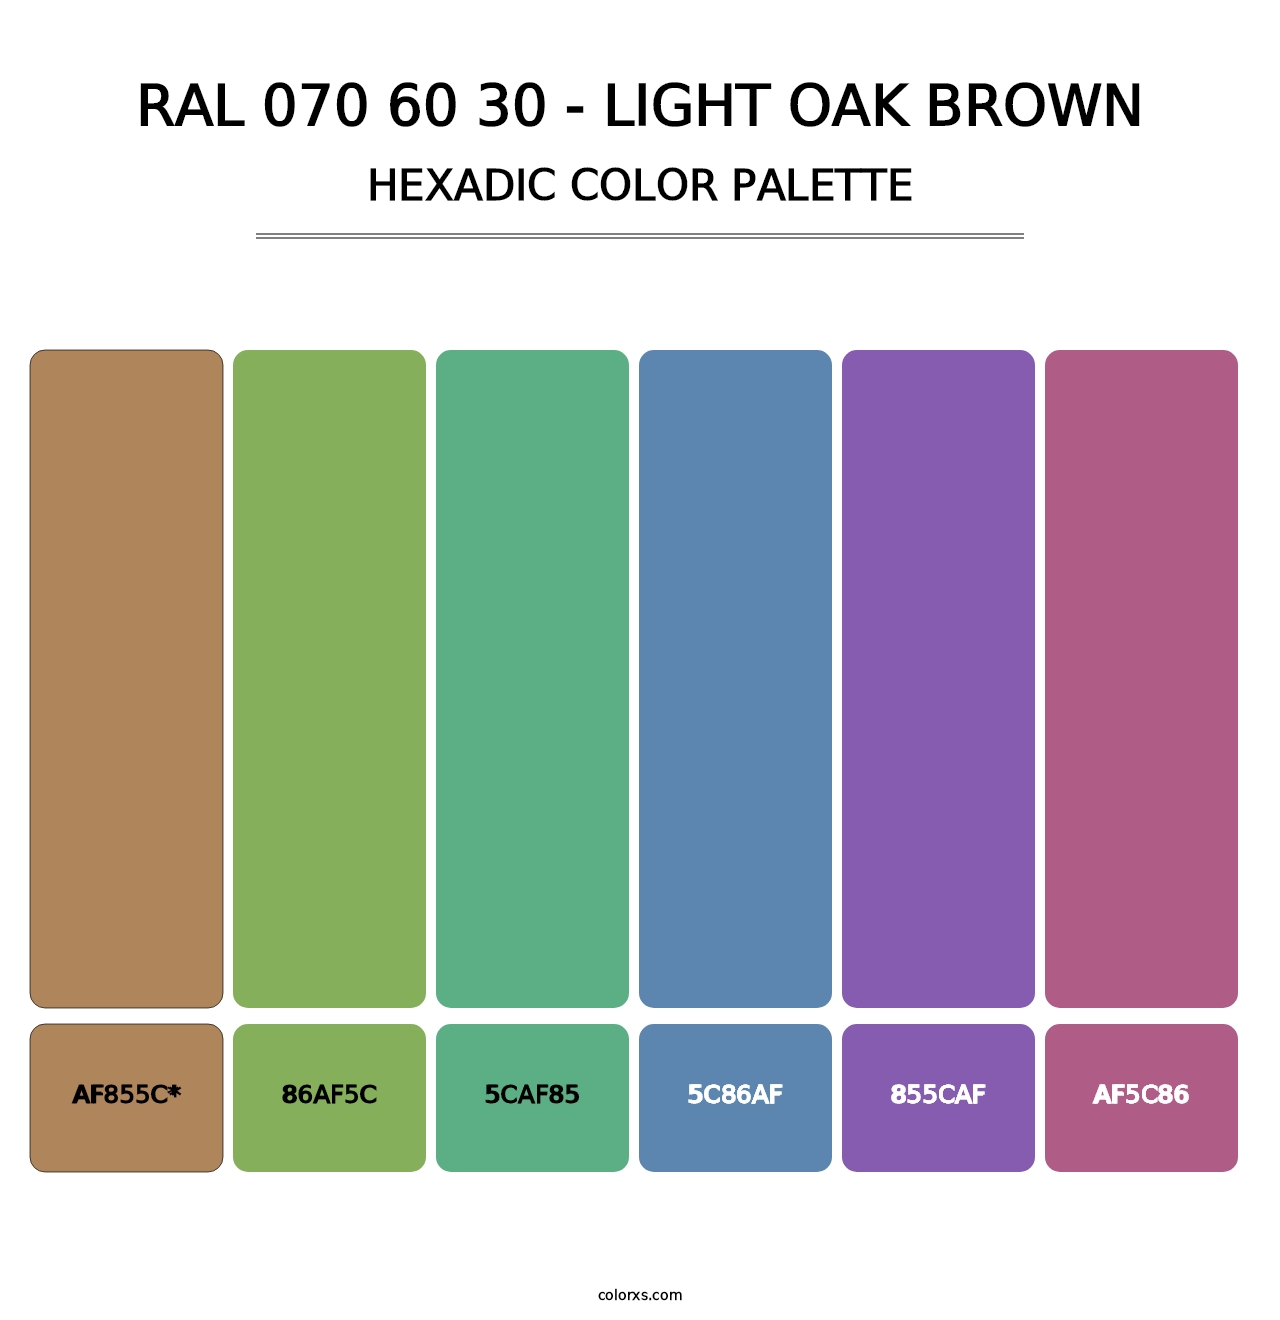 RAL 070 60 30 - Light Oak Brown - Hexadic Color Palette